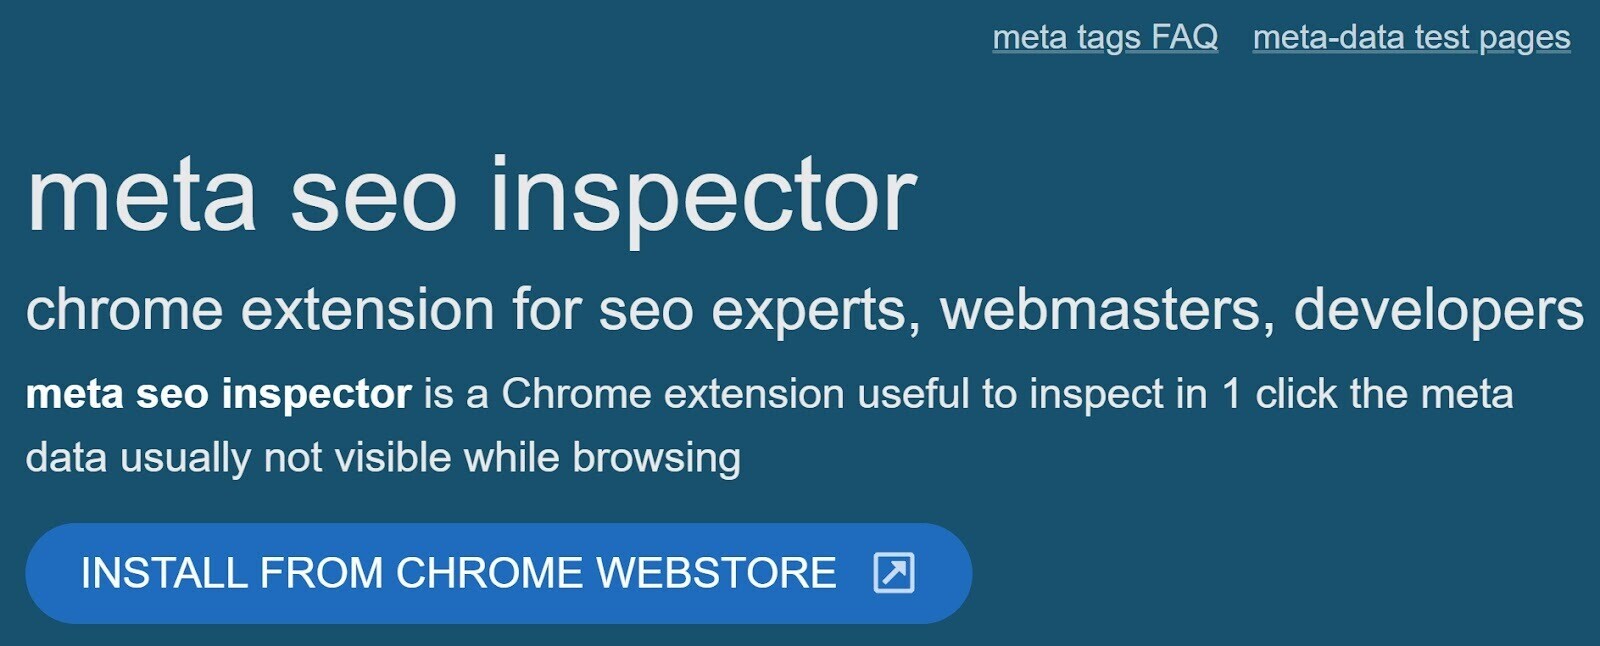 META SEO Inspector page